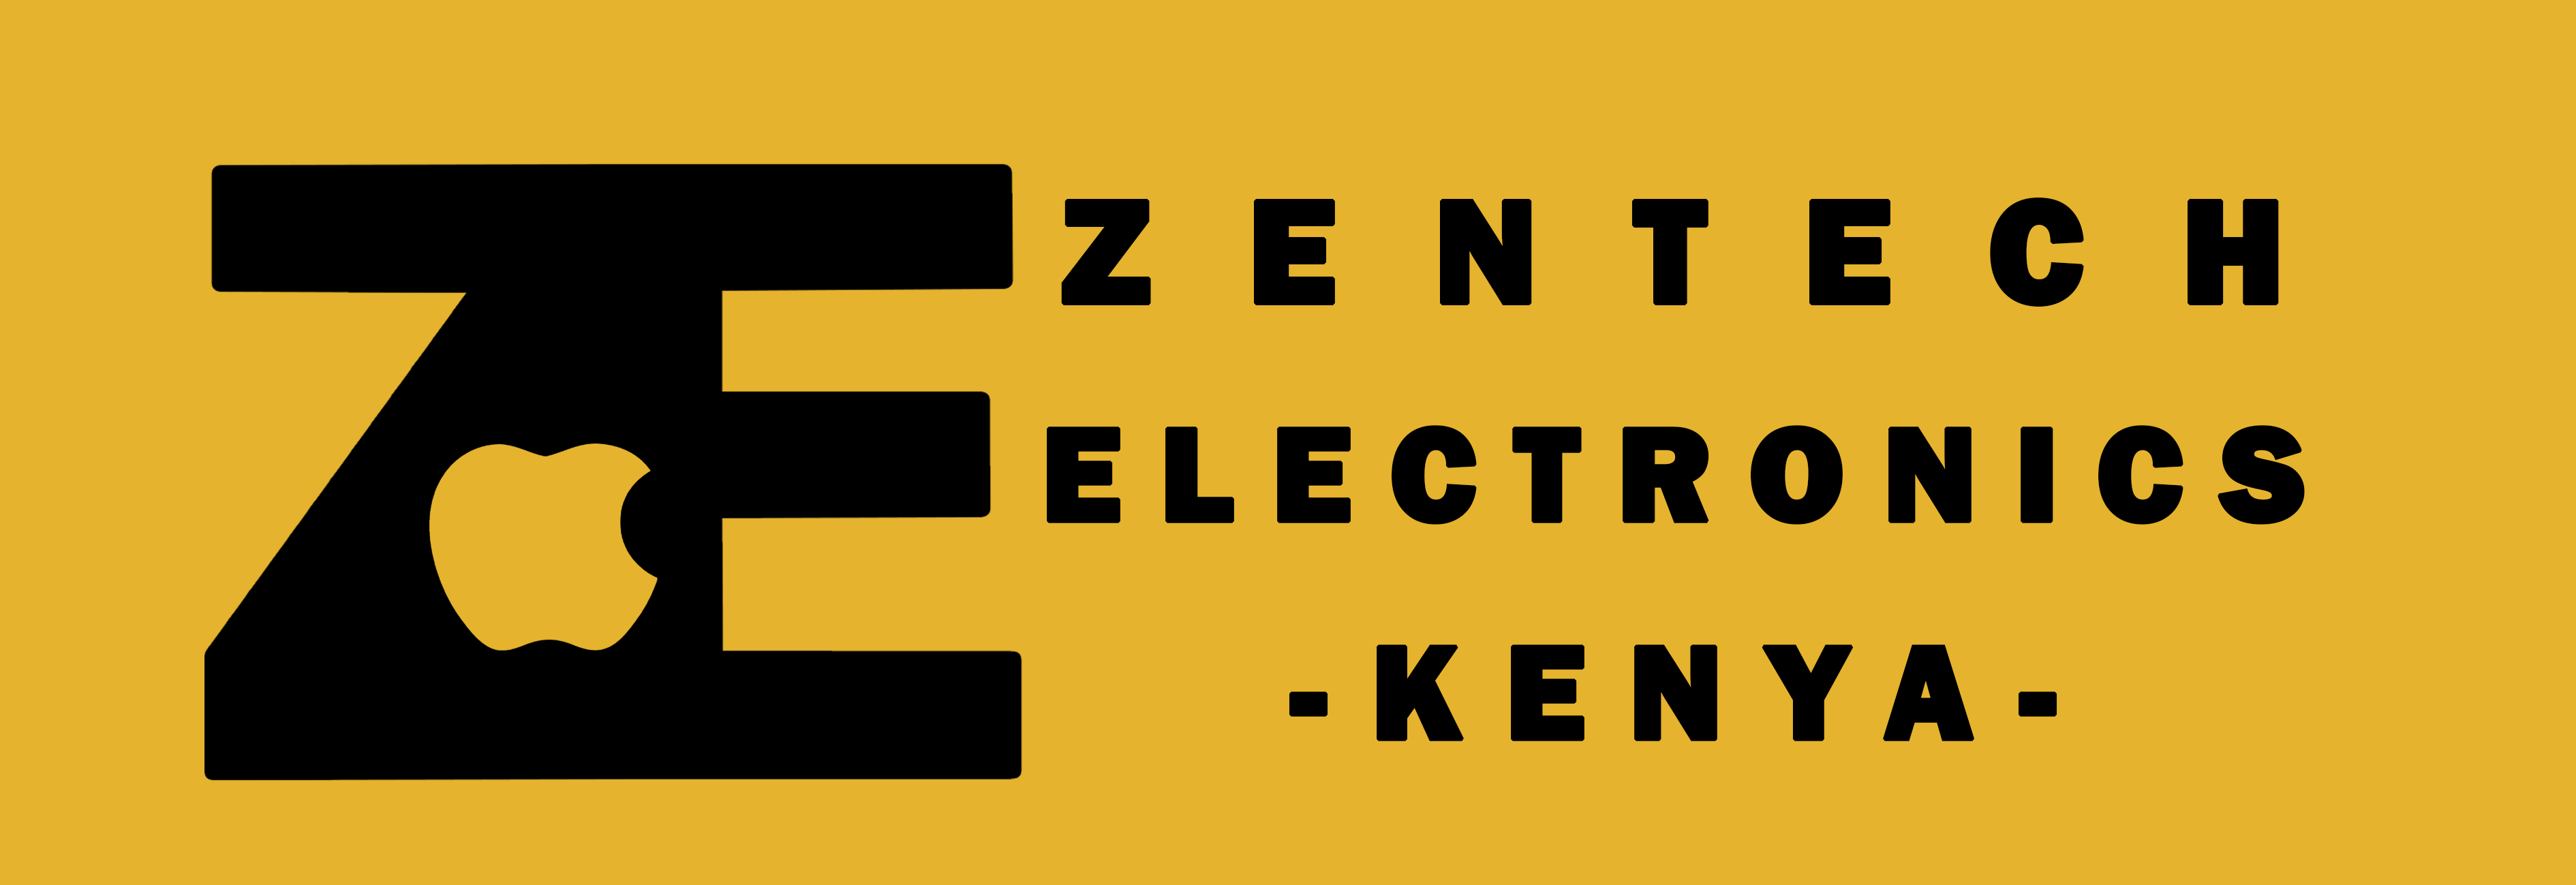 Zentech Electronics Kenya